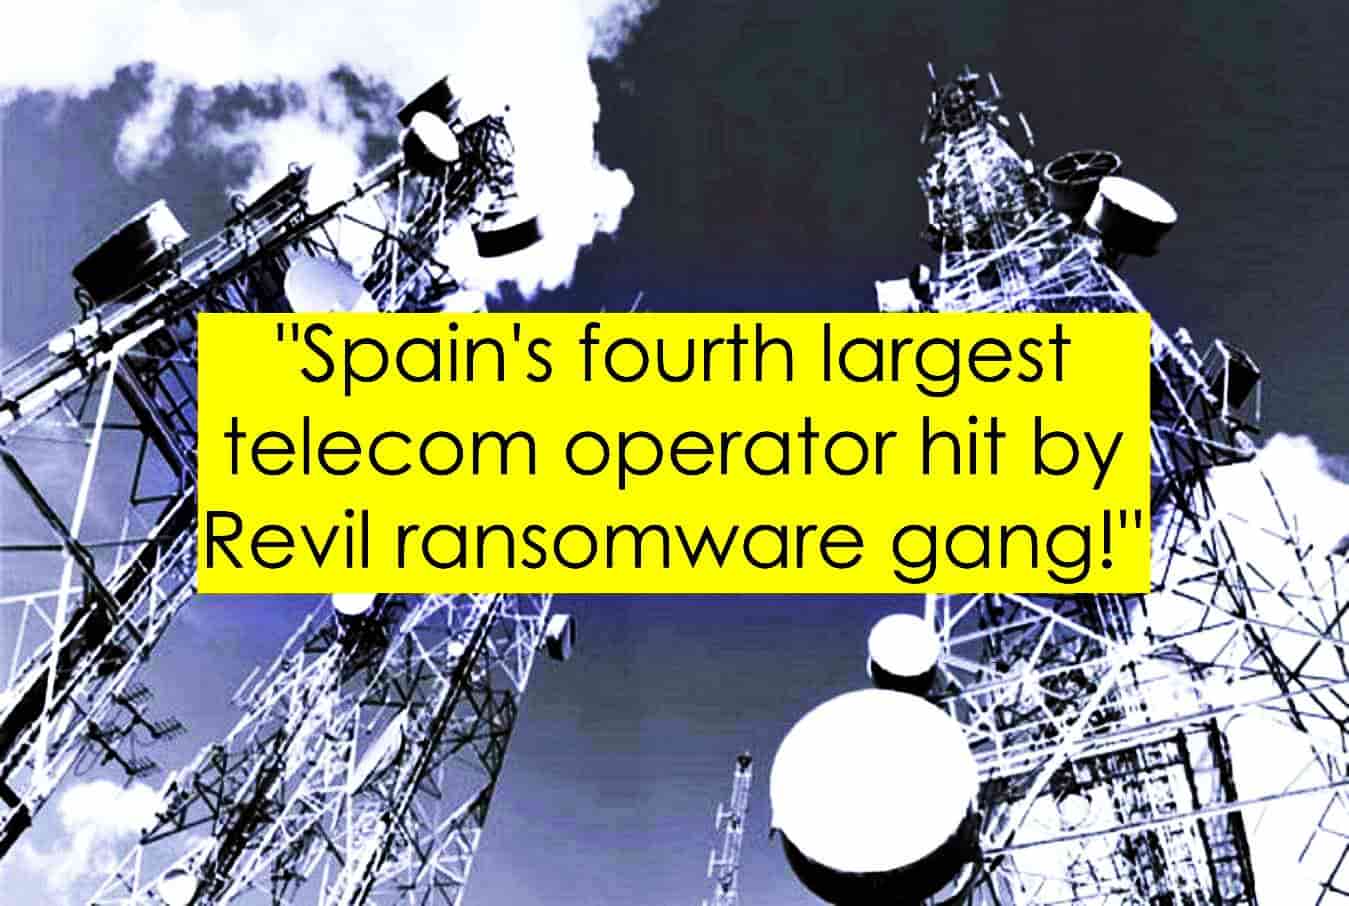 Spanish telecom giant MasMovil hit by Revil ransomware gang